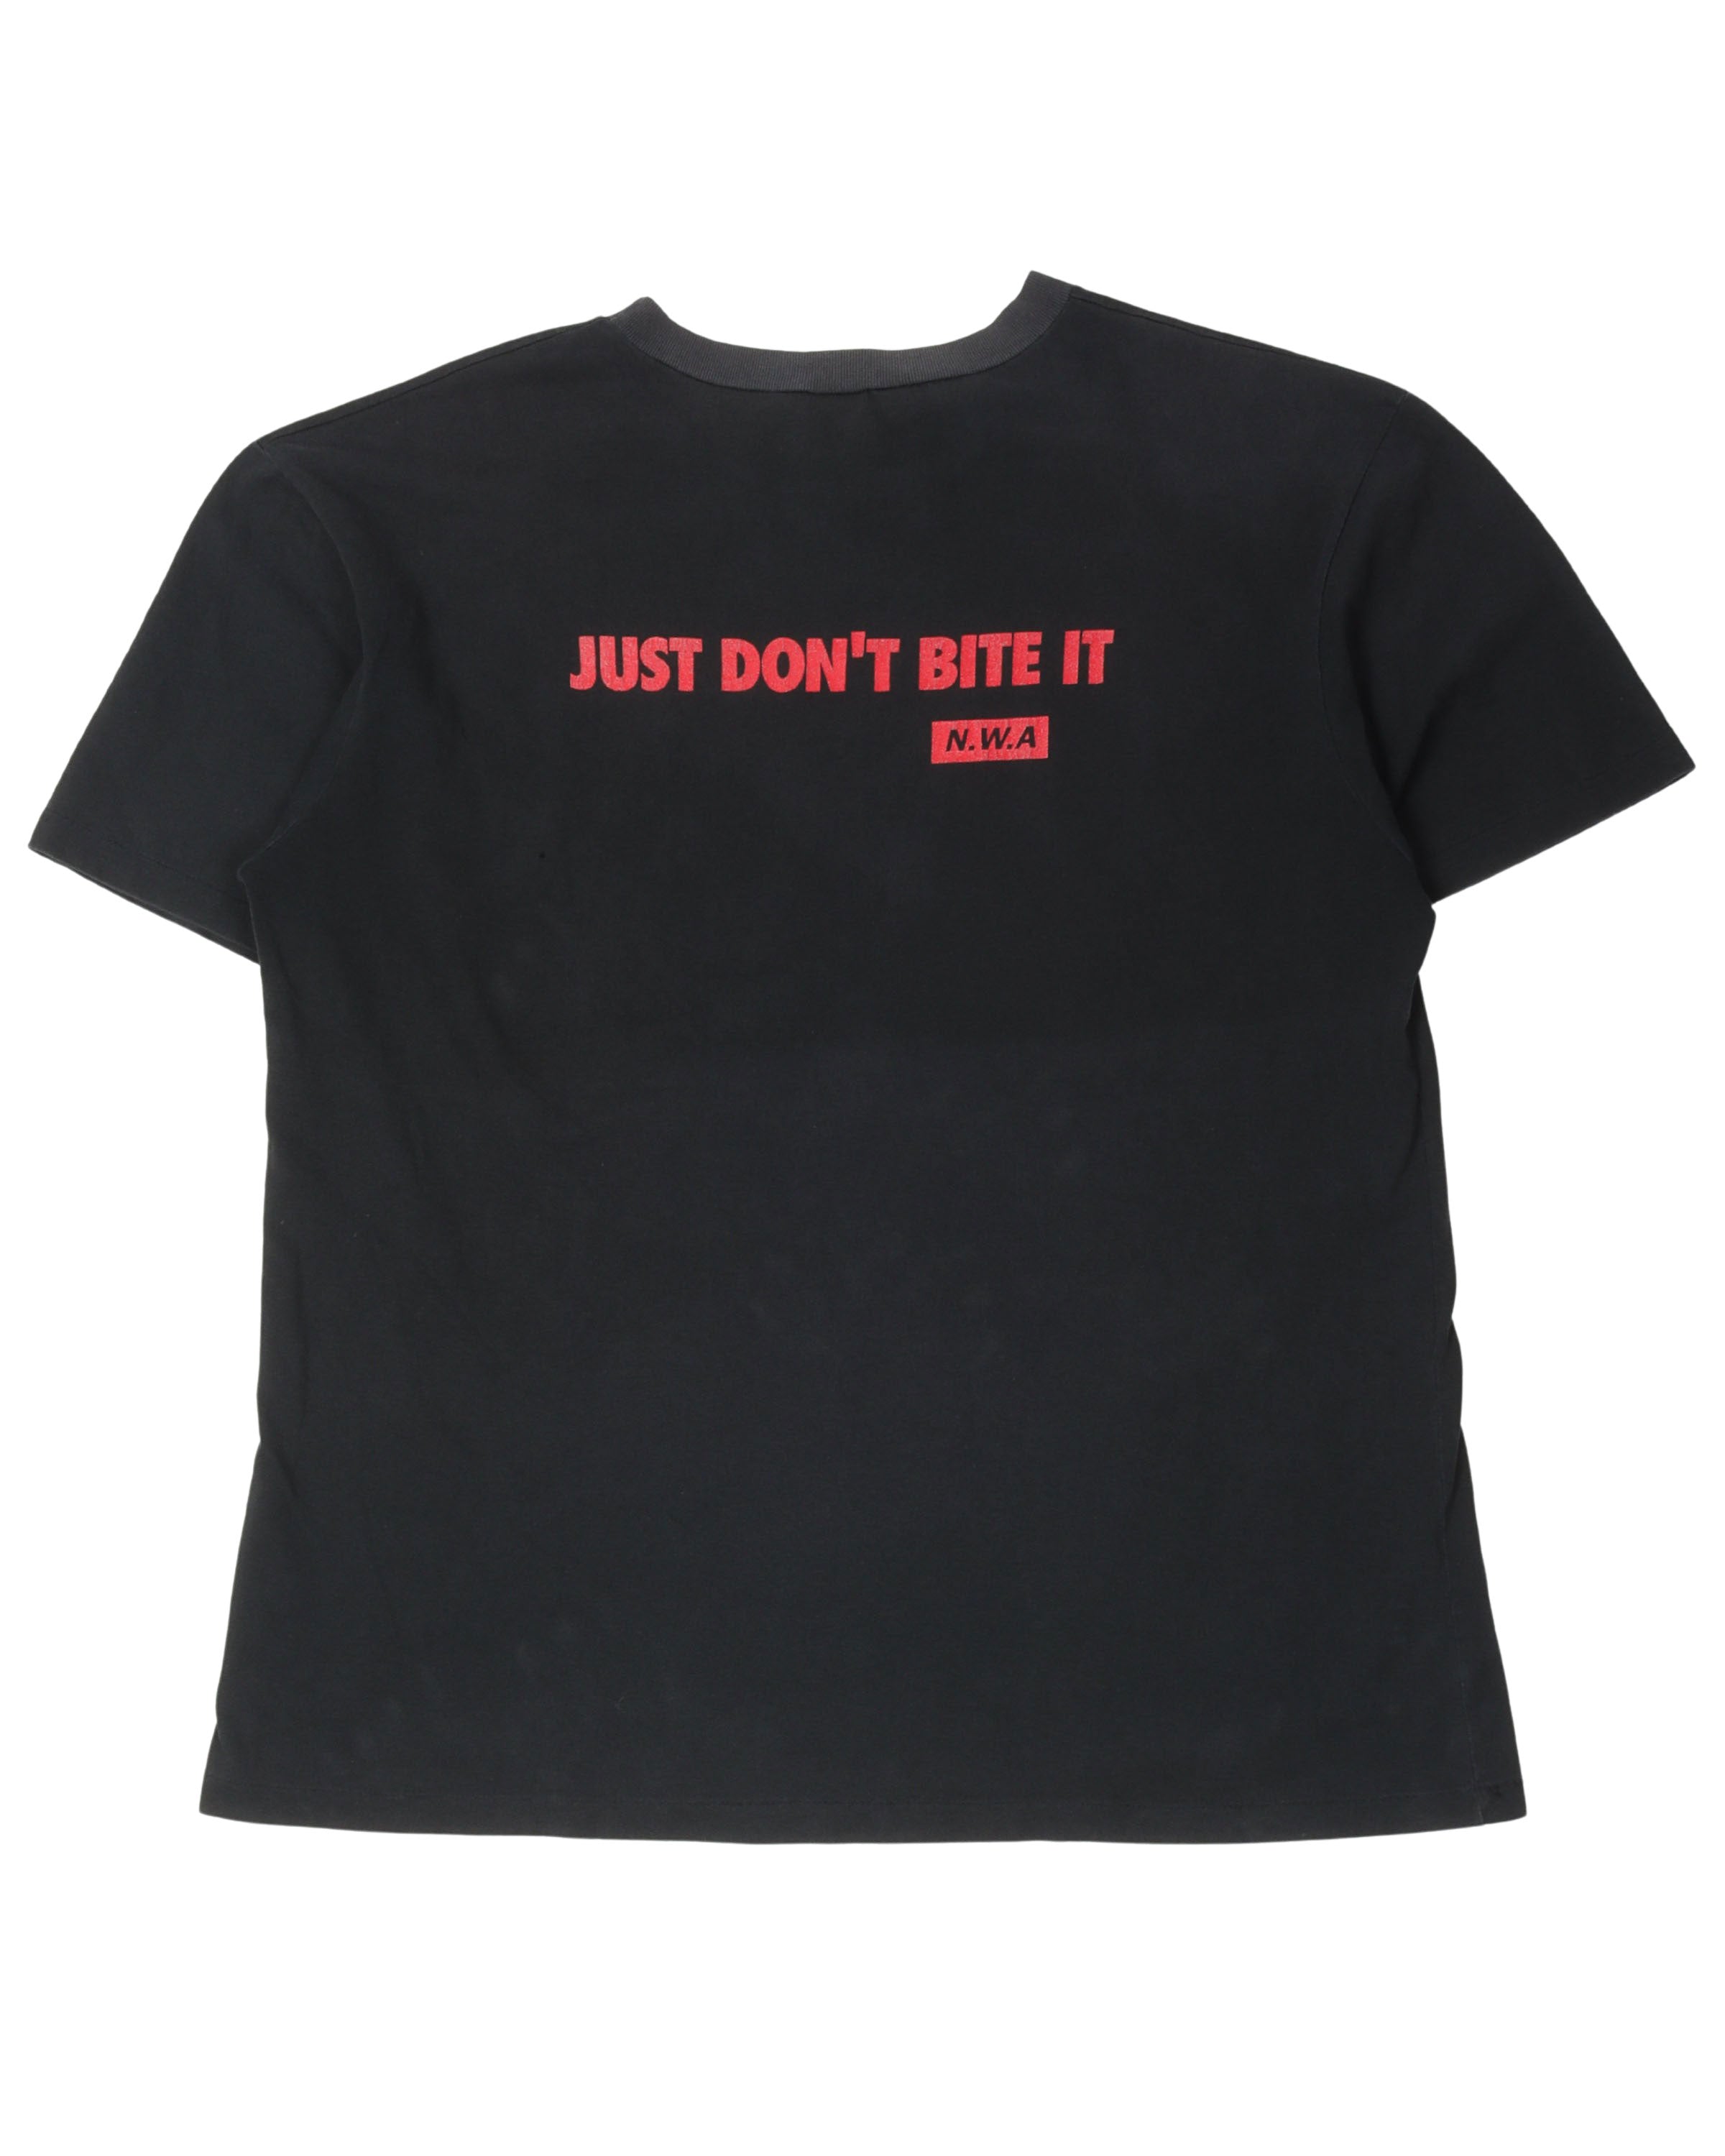 NWA Just Don't Bite It T-Shirt